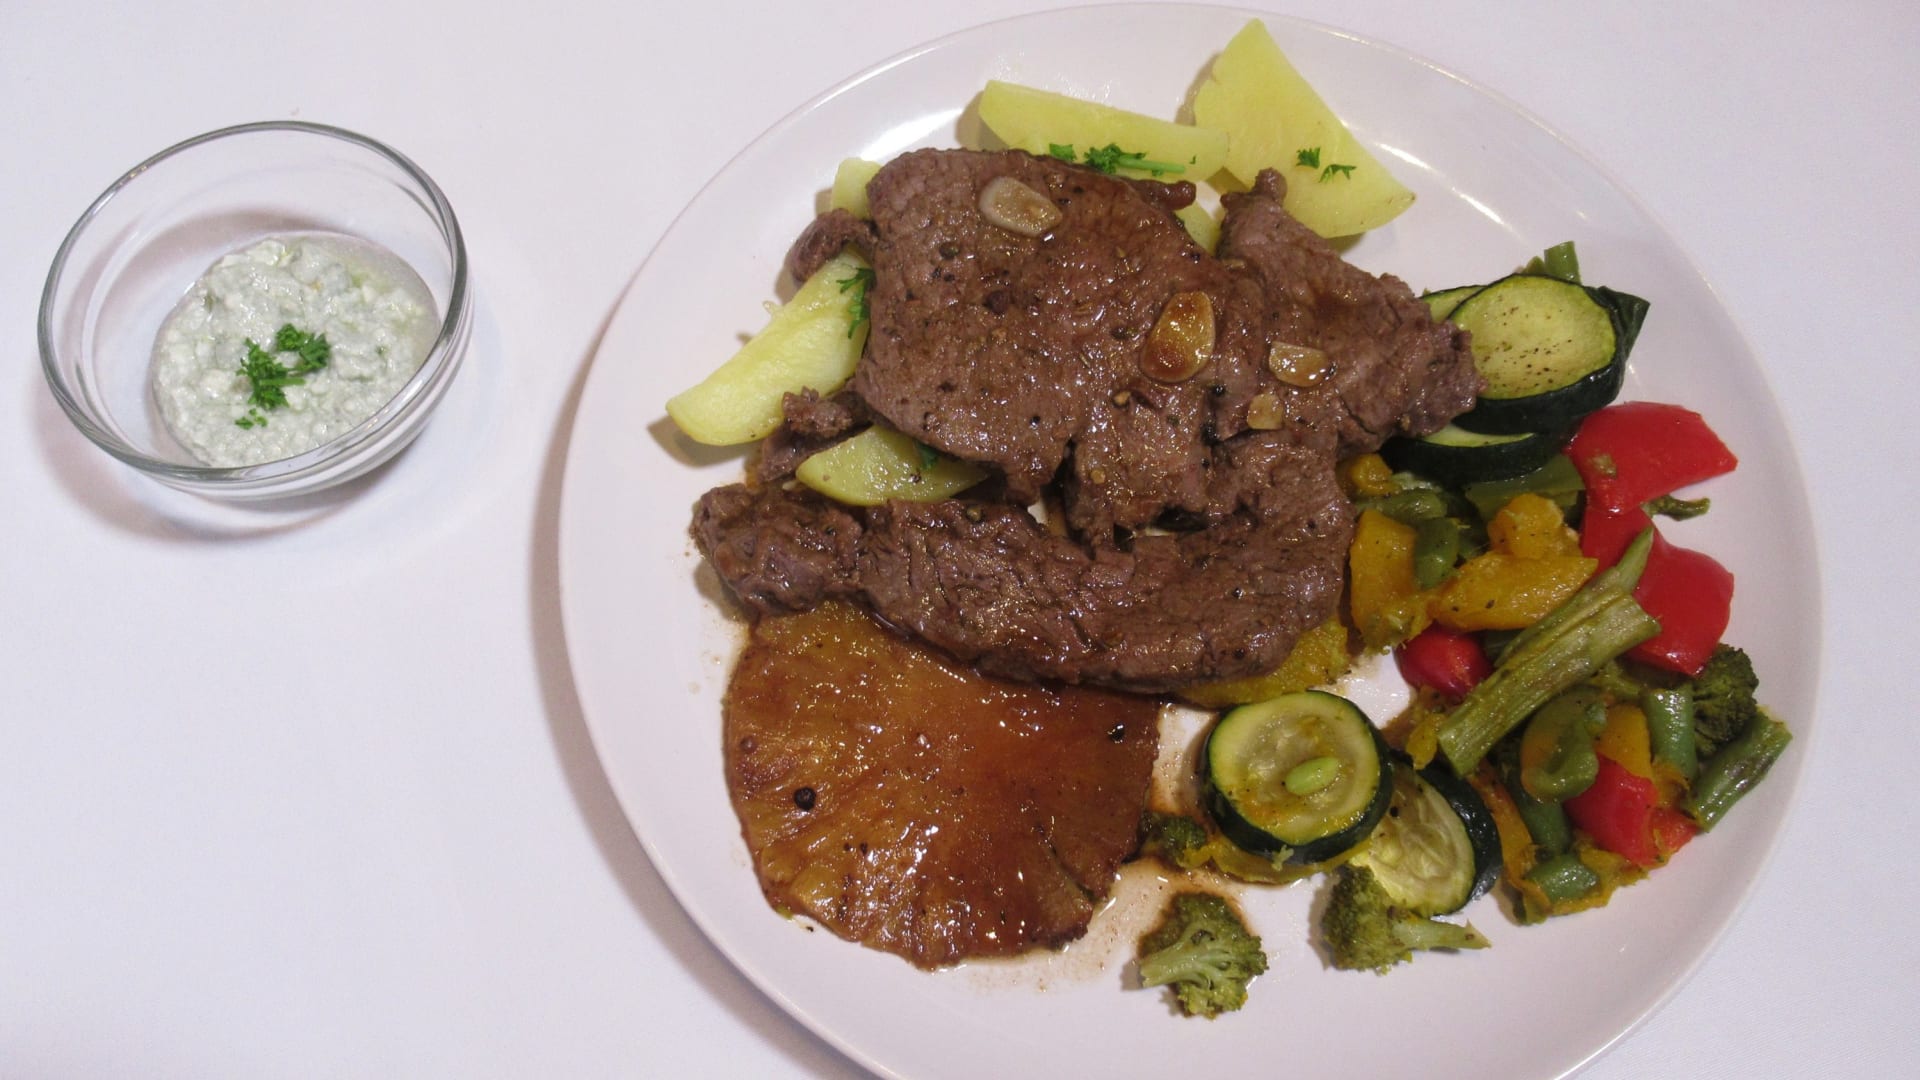 Hovězí steak na ananasu s rokfórovým dresinkem, vařené brambory a pečená zelenina